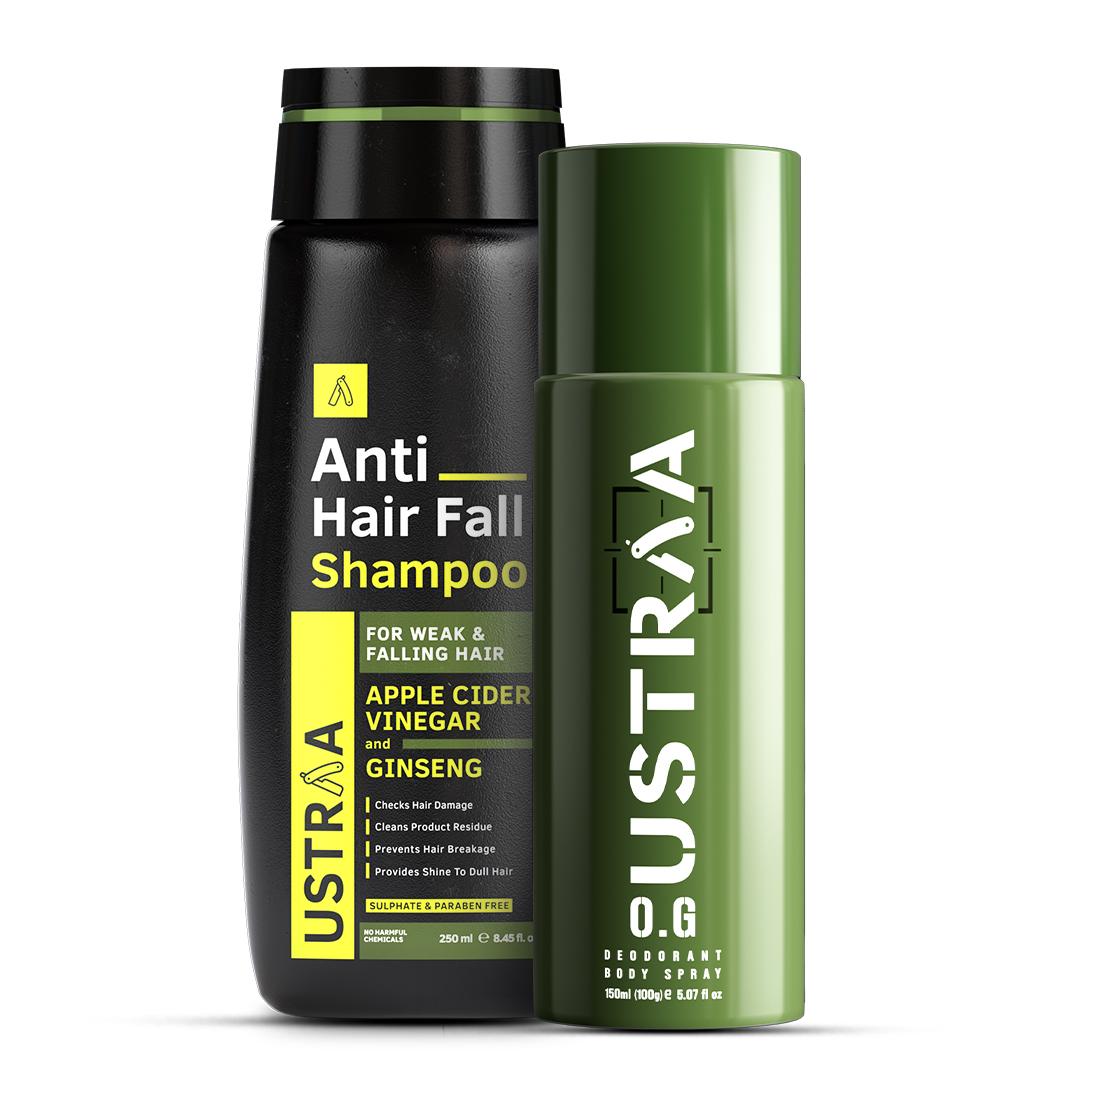 O.G Deodorant & Anti-Hair Fall Shampoo